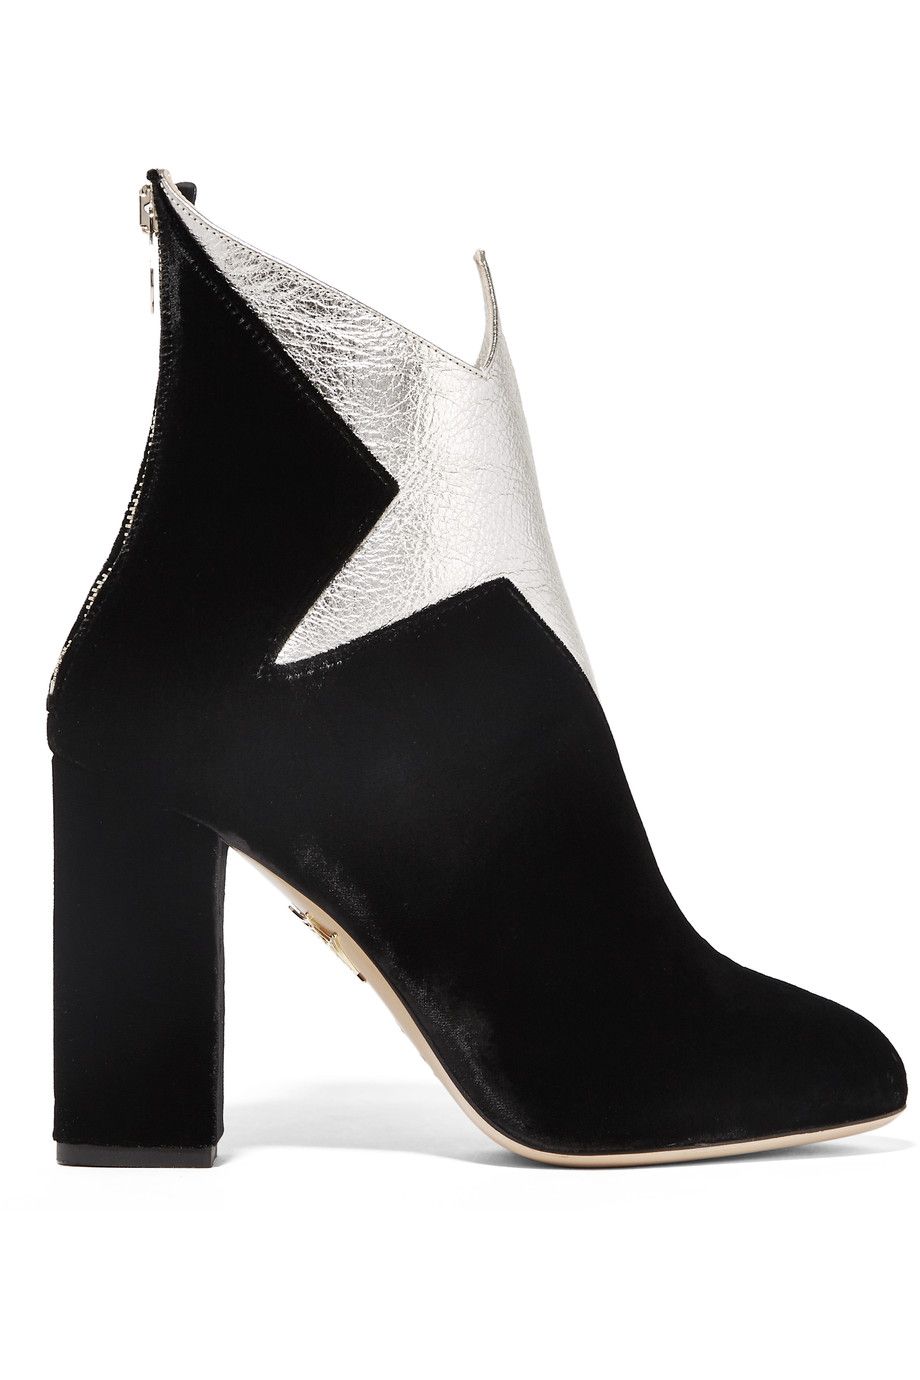 Product, White, High heels, Leather, Black, Beige, Tan, Fashion design, Foot, Sandal, 